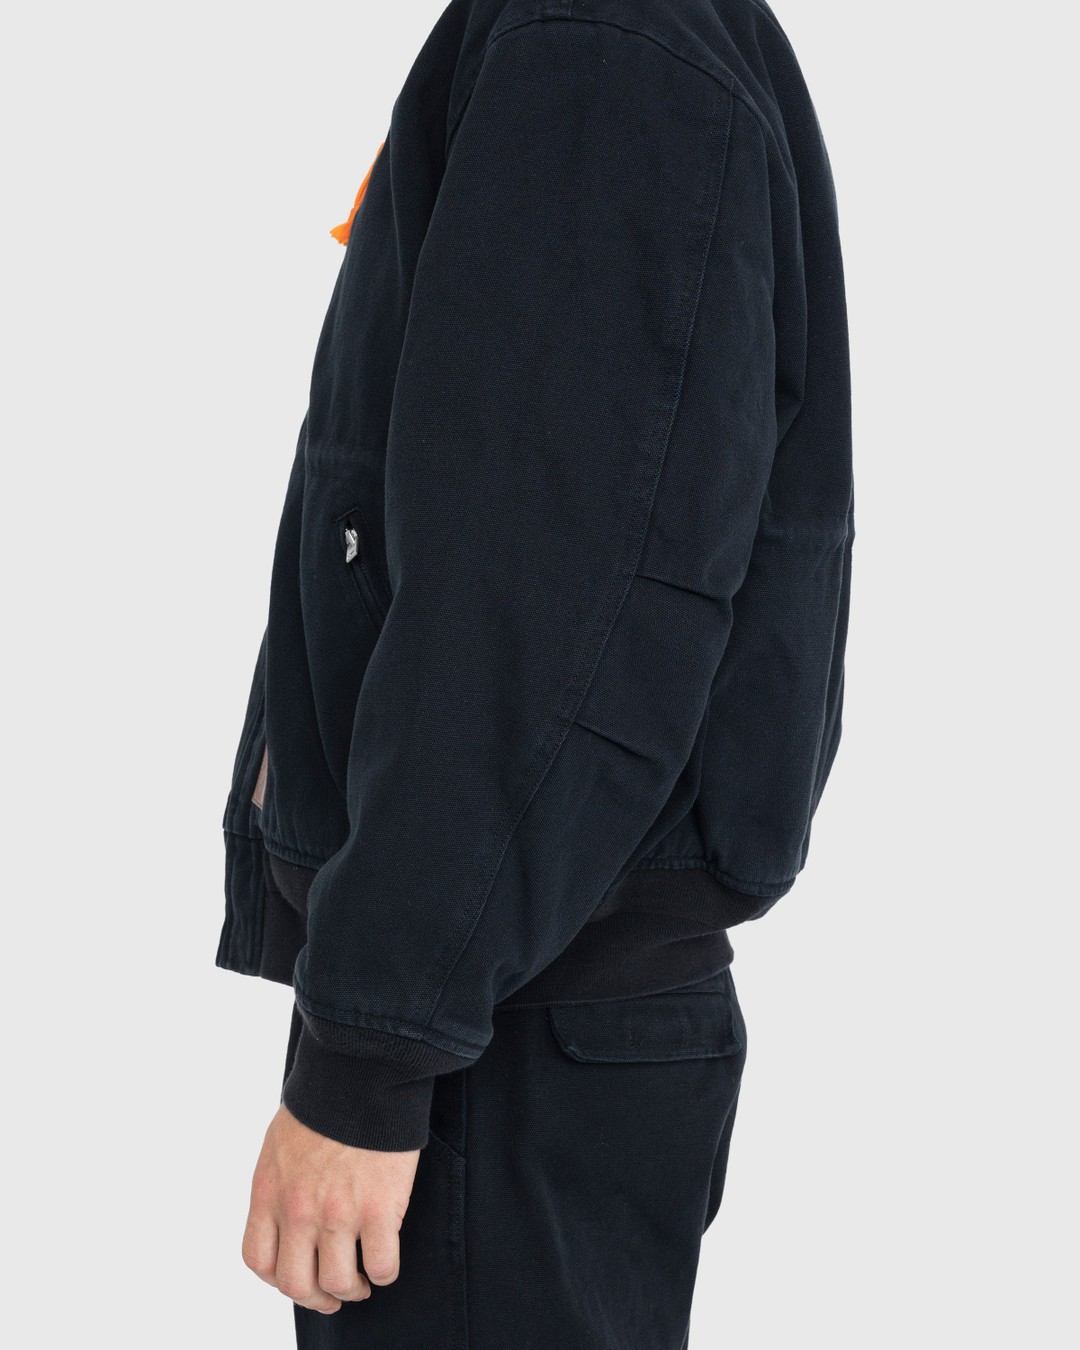 Acne Studios – Organic Cotton Bomber Jacket Black - Outerwear - Black - Image 4